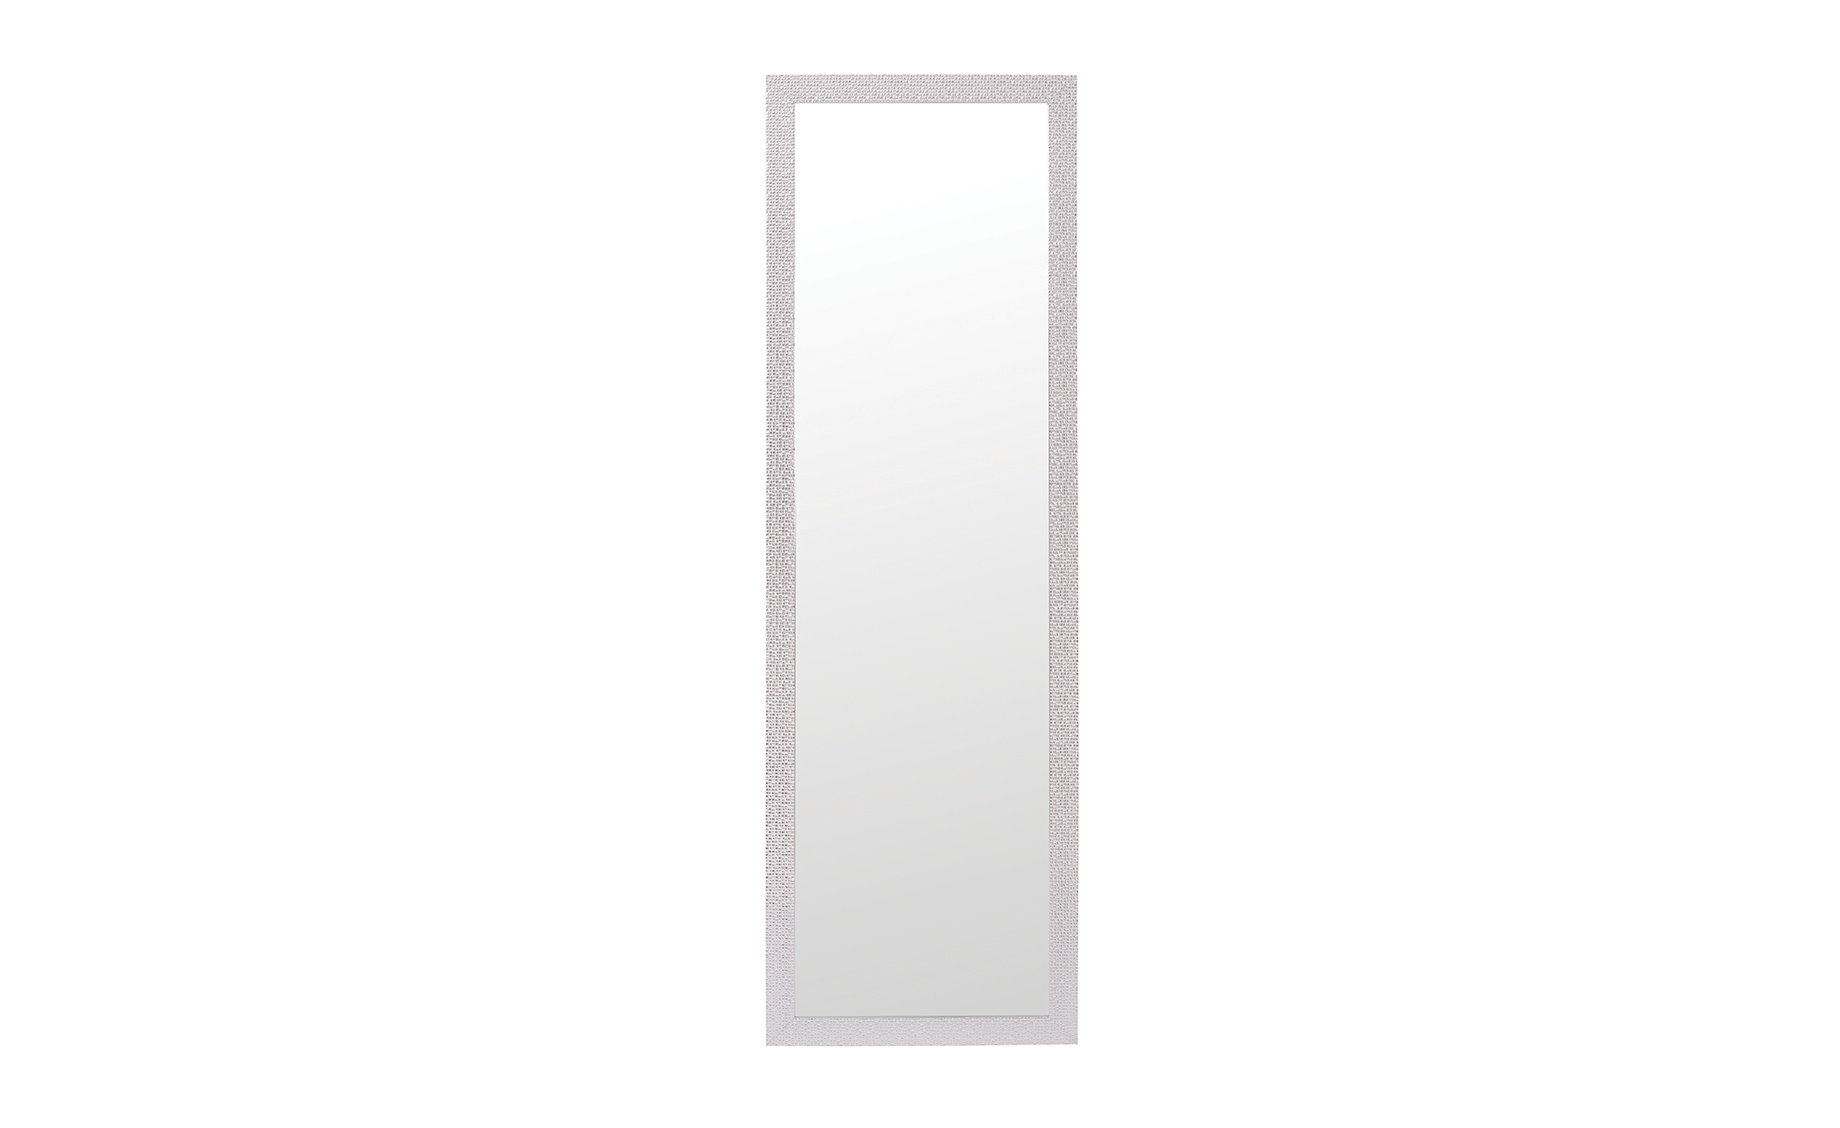 Zidno ogledalo Madison 49,2x149,2cm